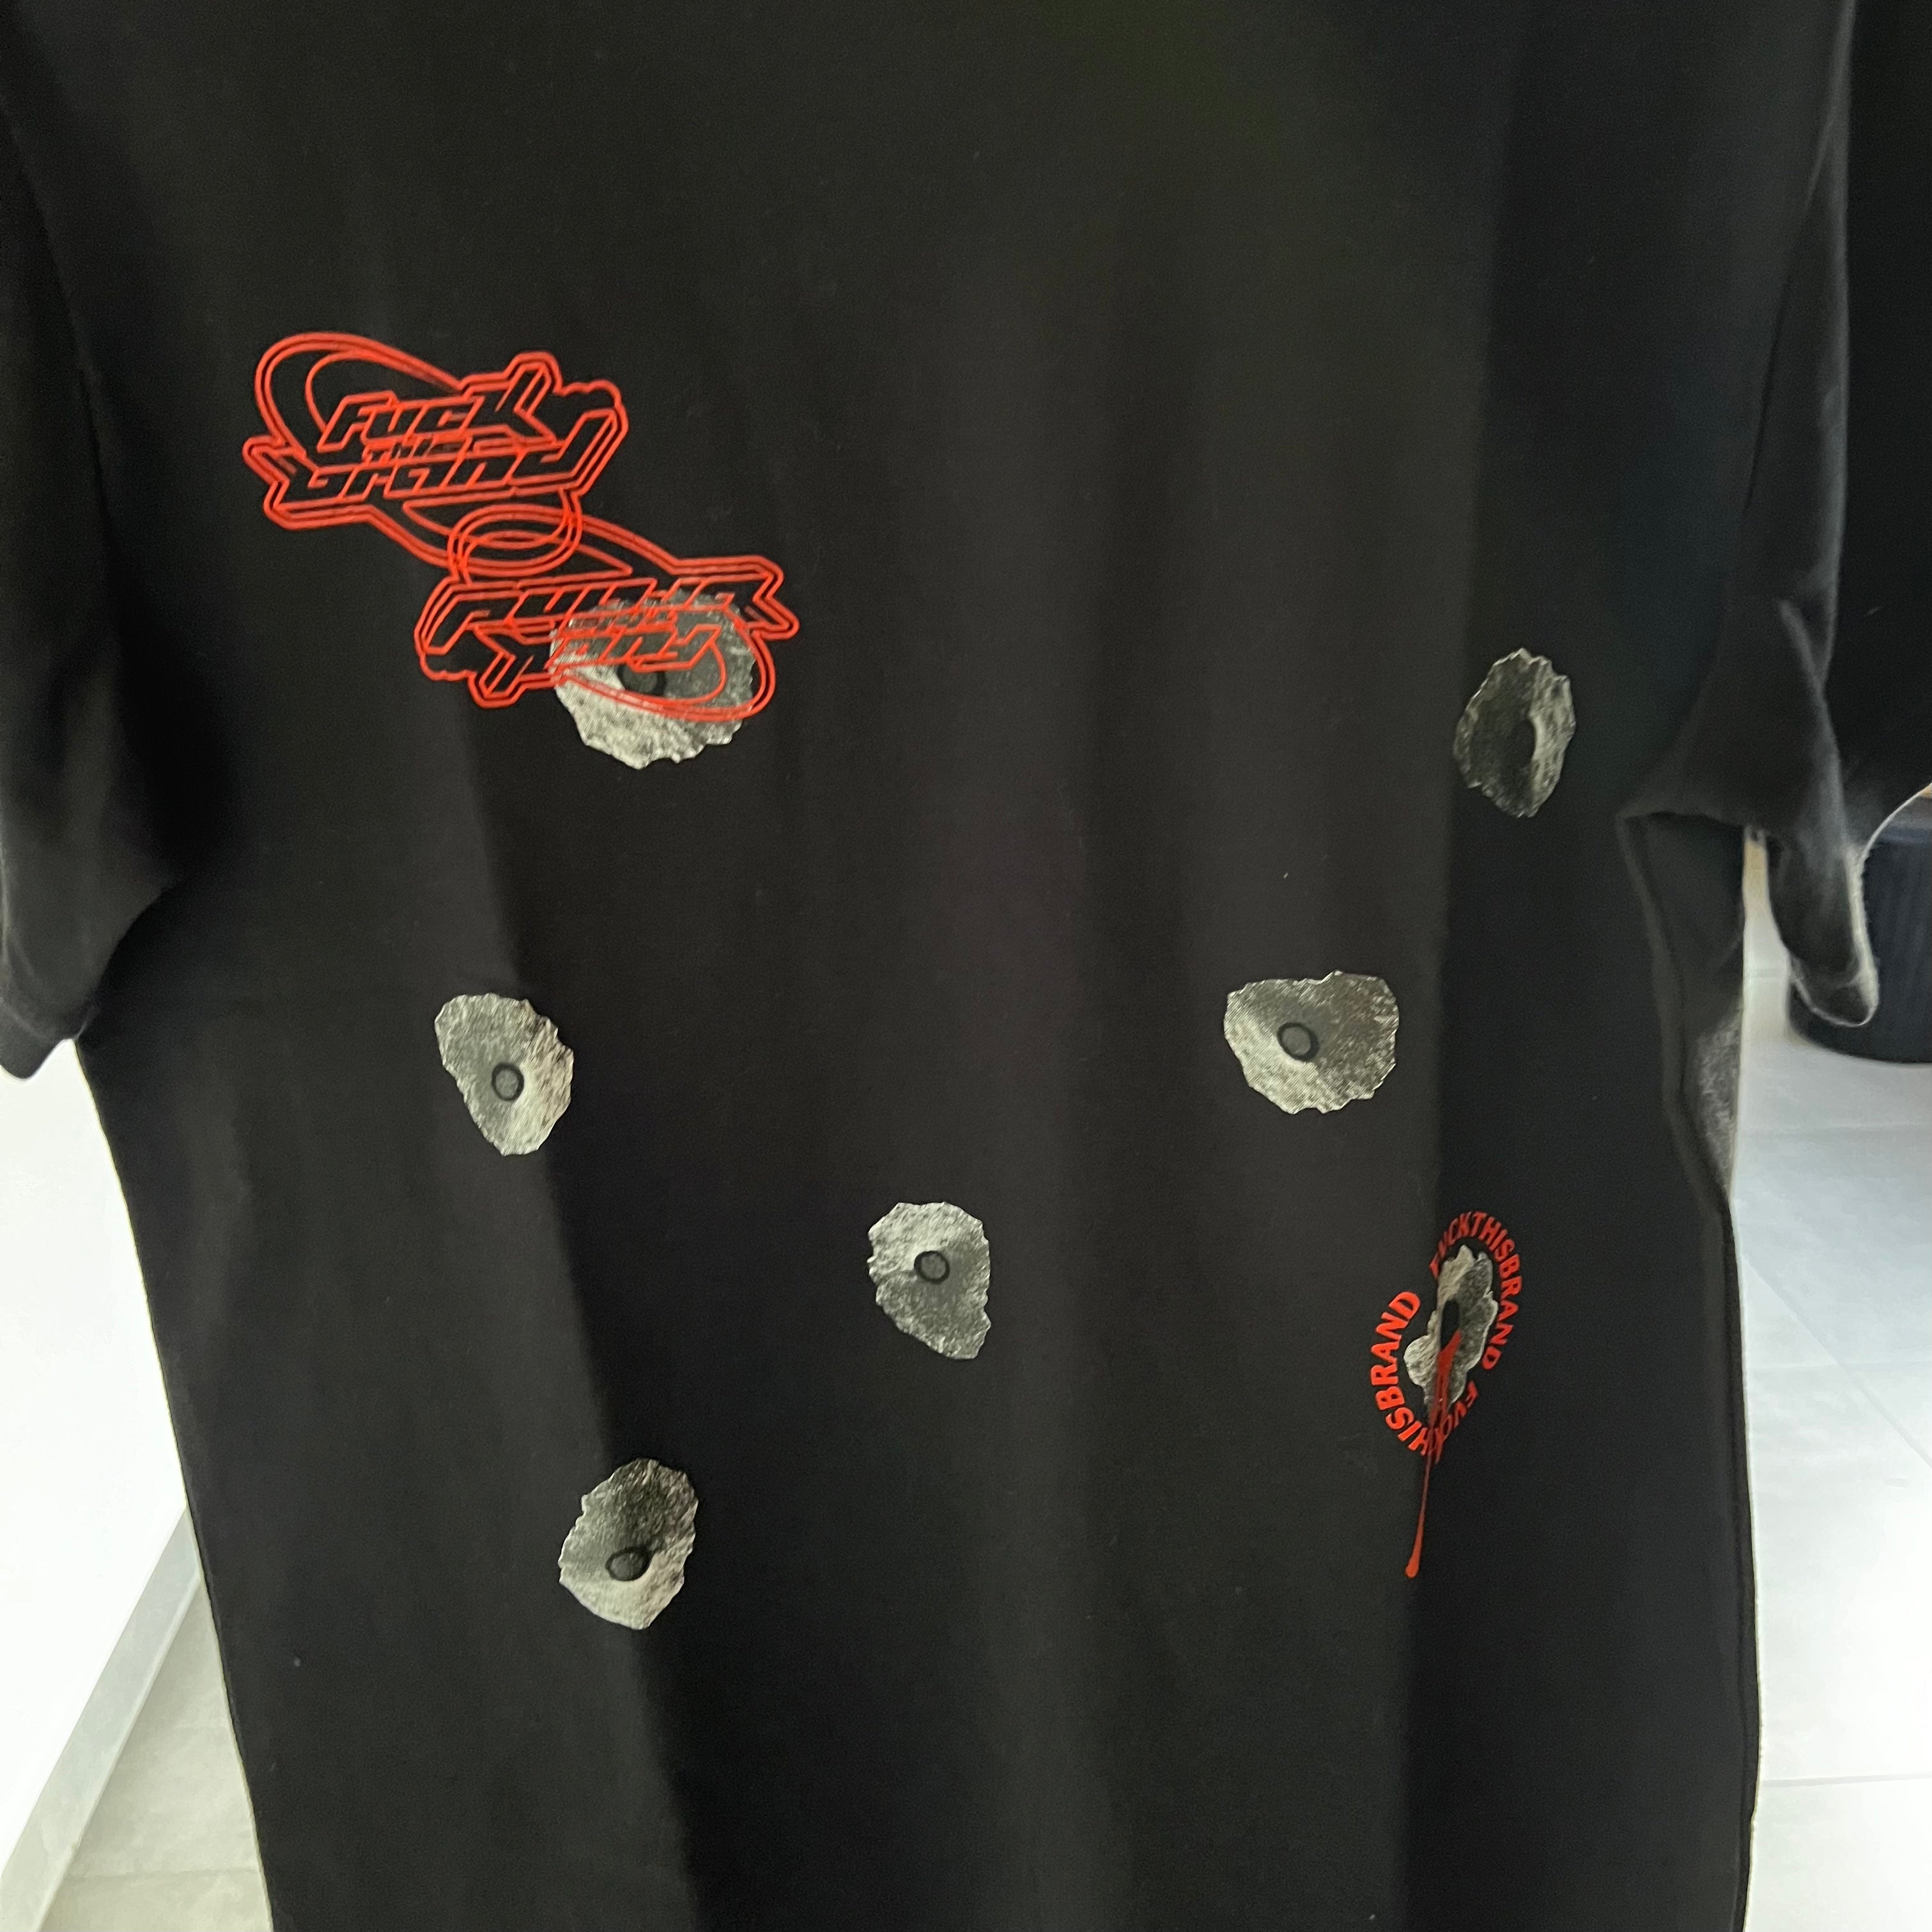 FVCKTHISBRAND Printed T-Shirt Black Showroom Nhype Lodz Polska 3